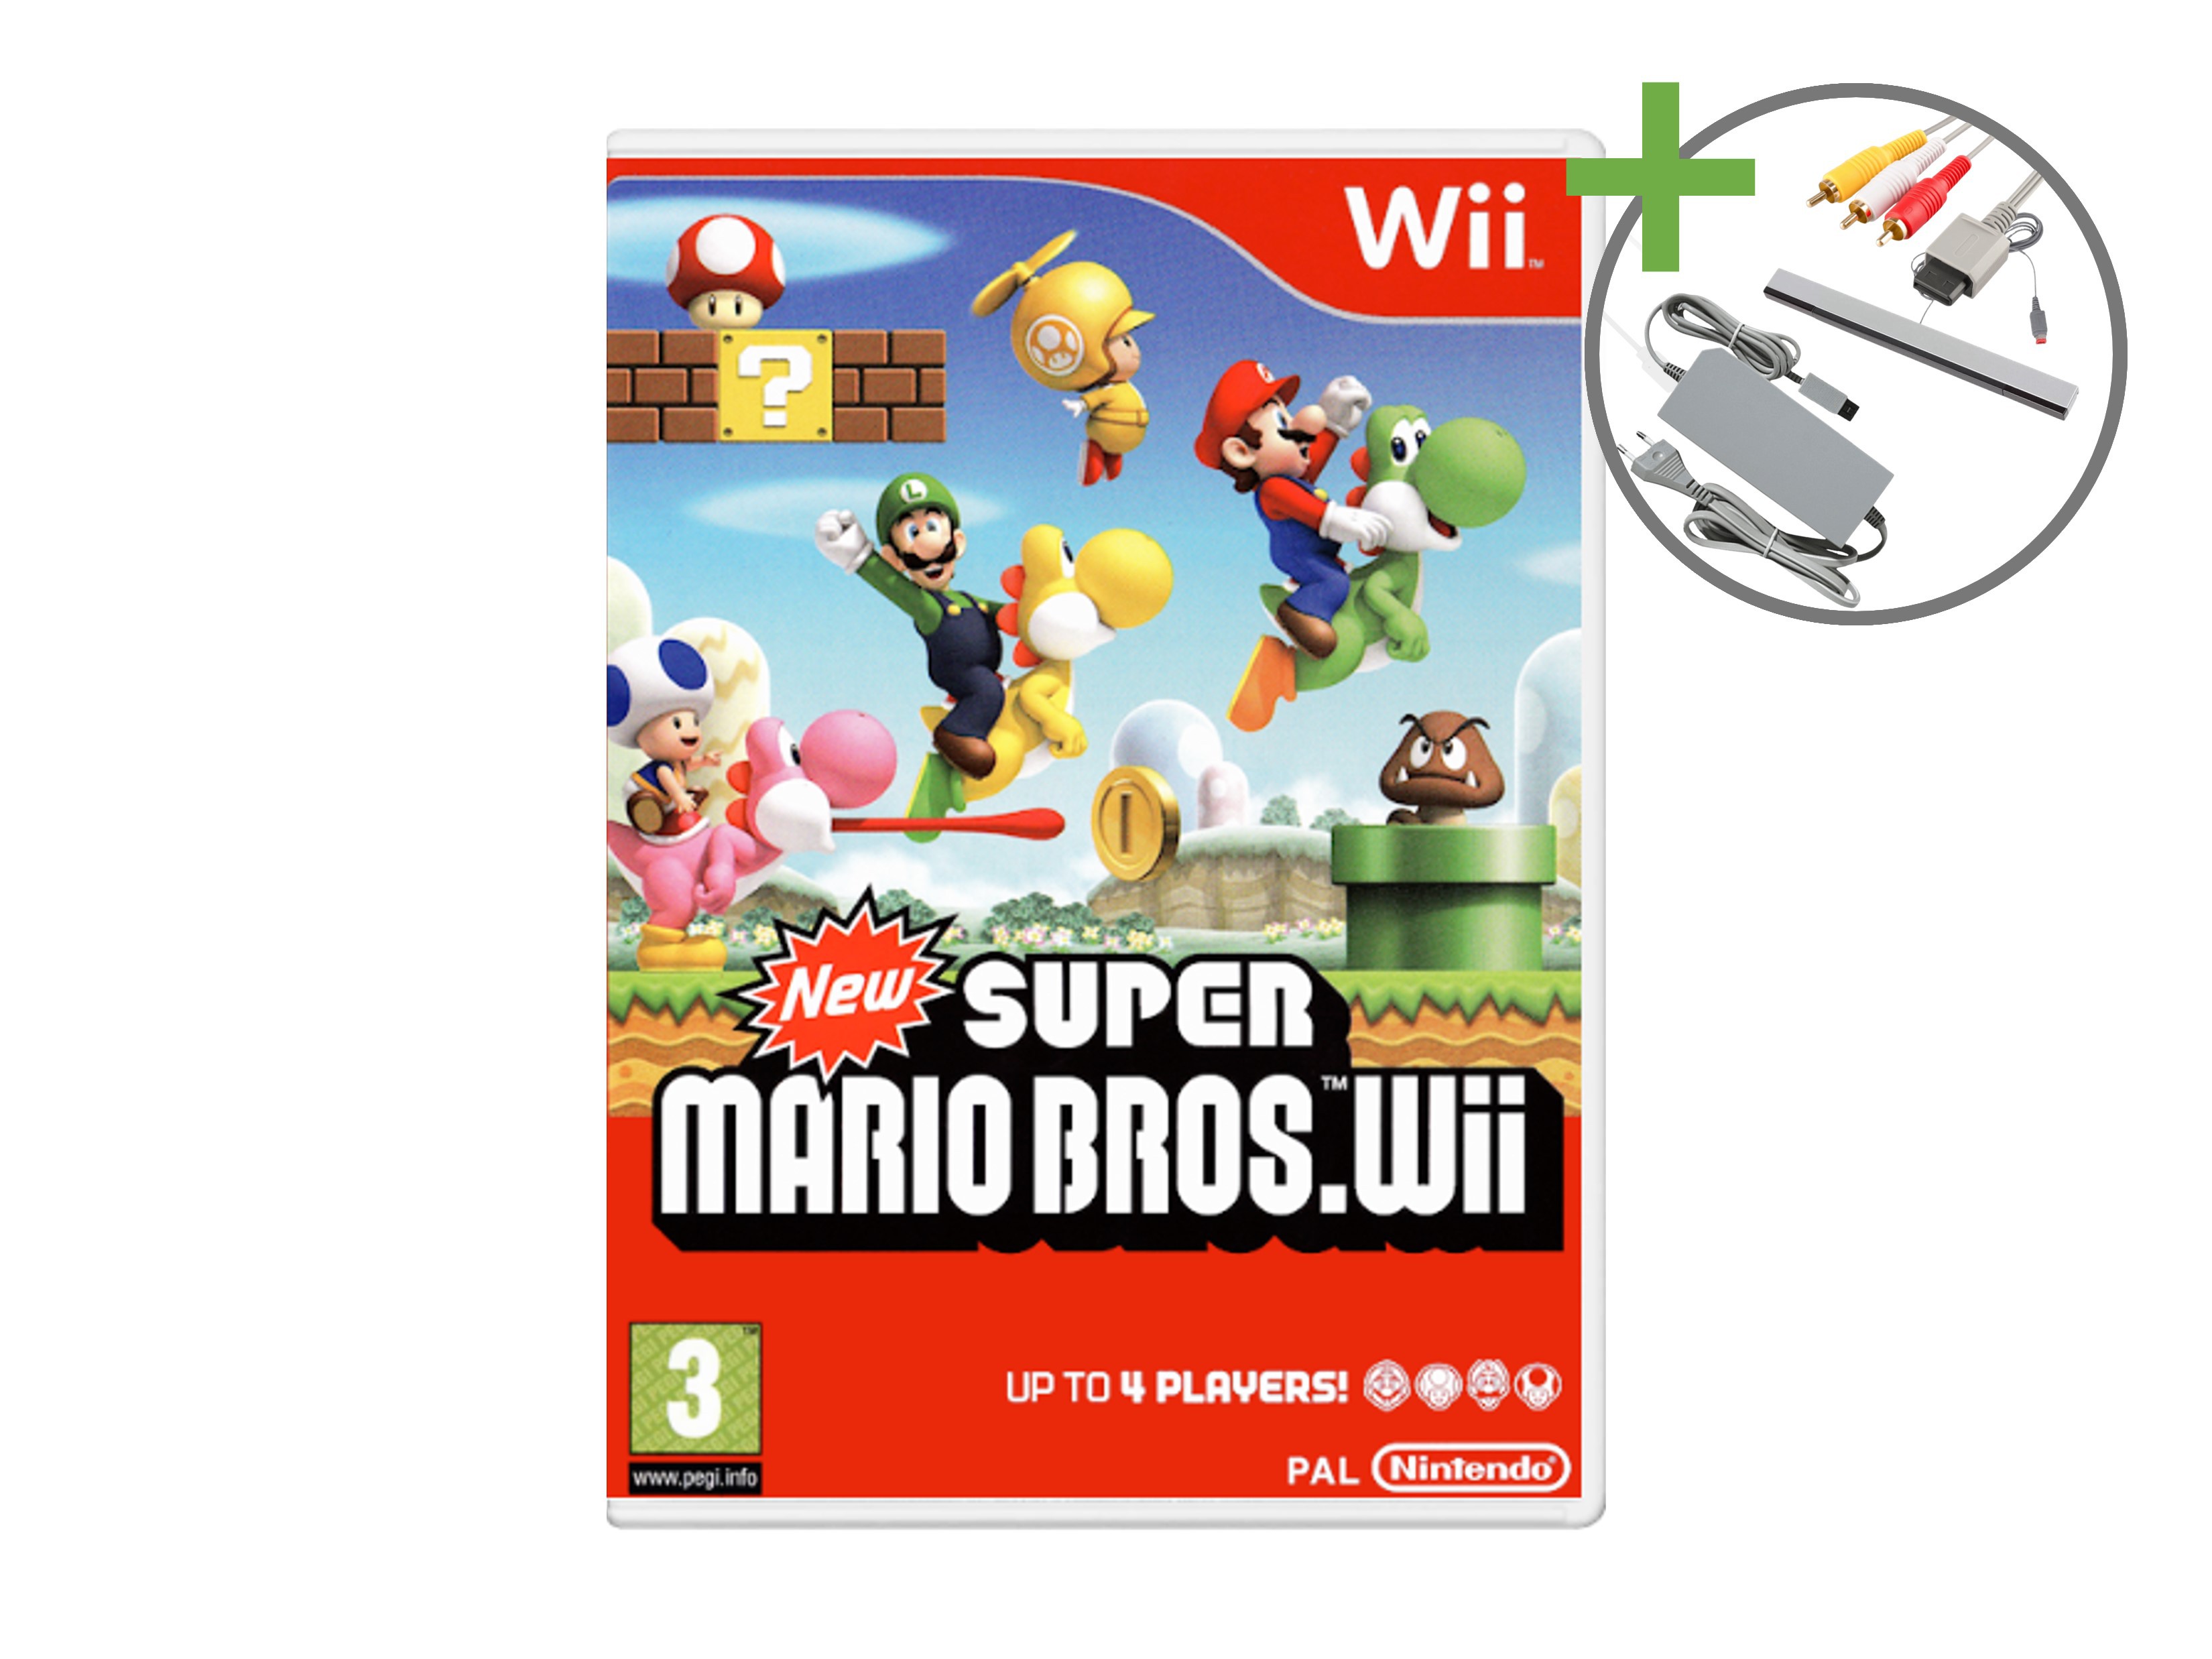 Nintendo Wii Mini Starter Pack - New Super Mario Bros. Wii Edition - Wii Hardware - 4